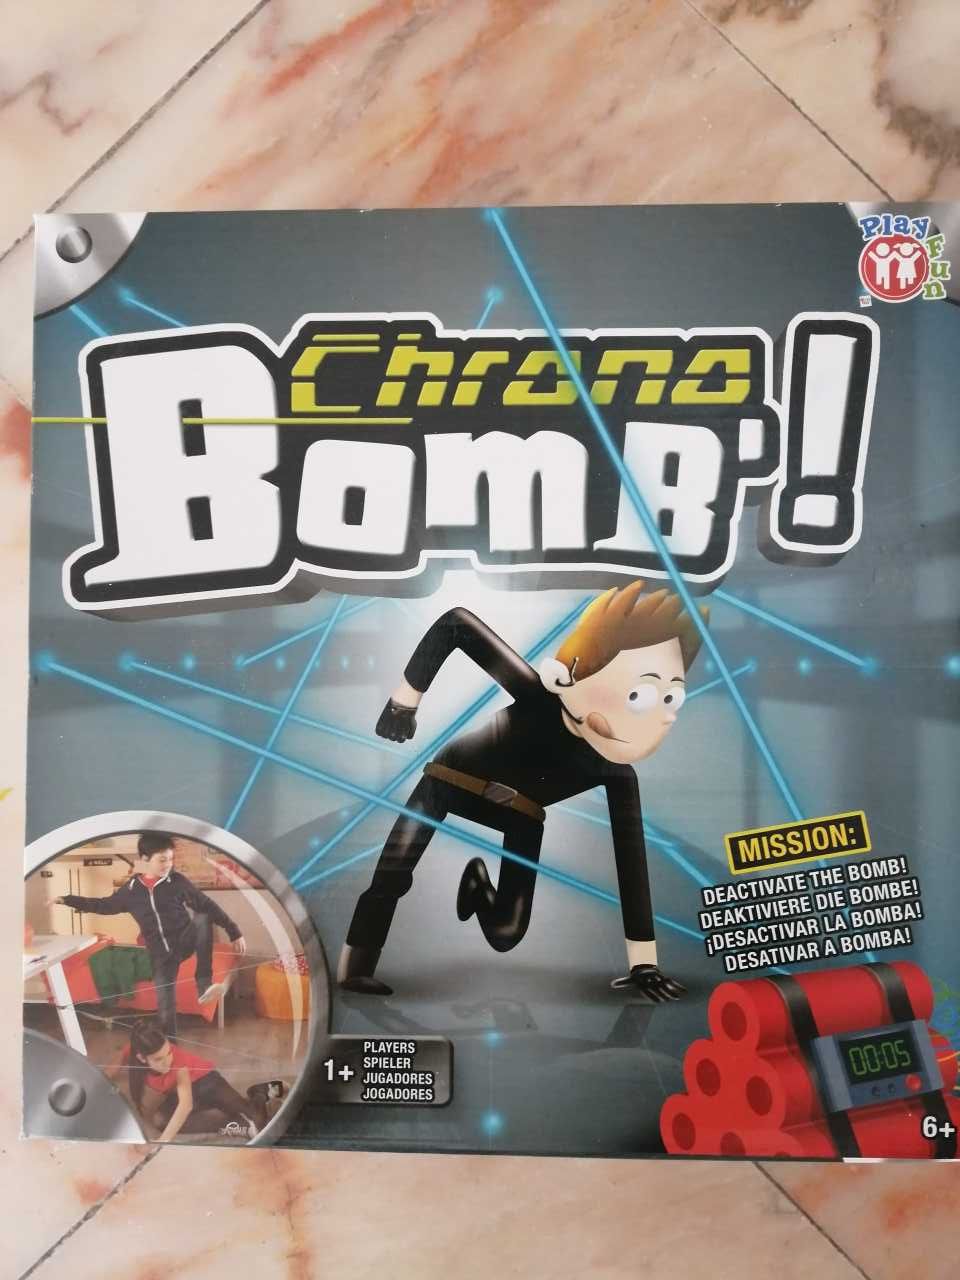 Jogo Chrono Bomb! Habilidade